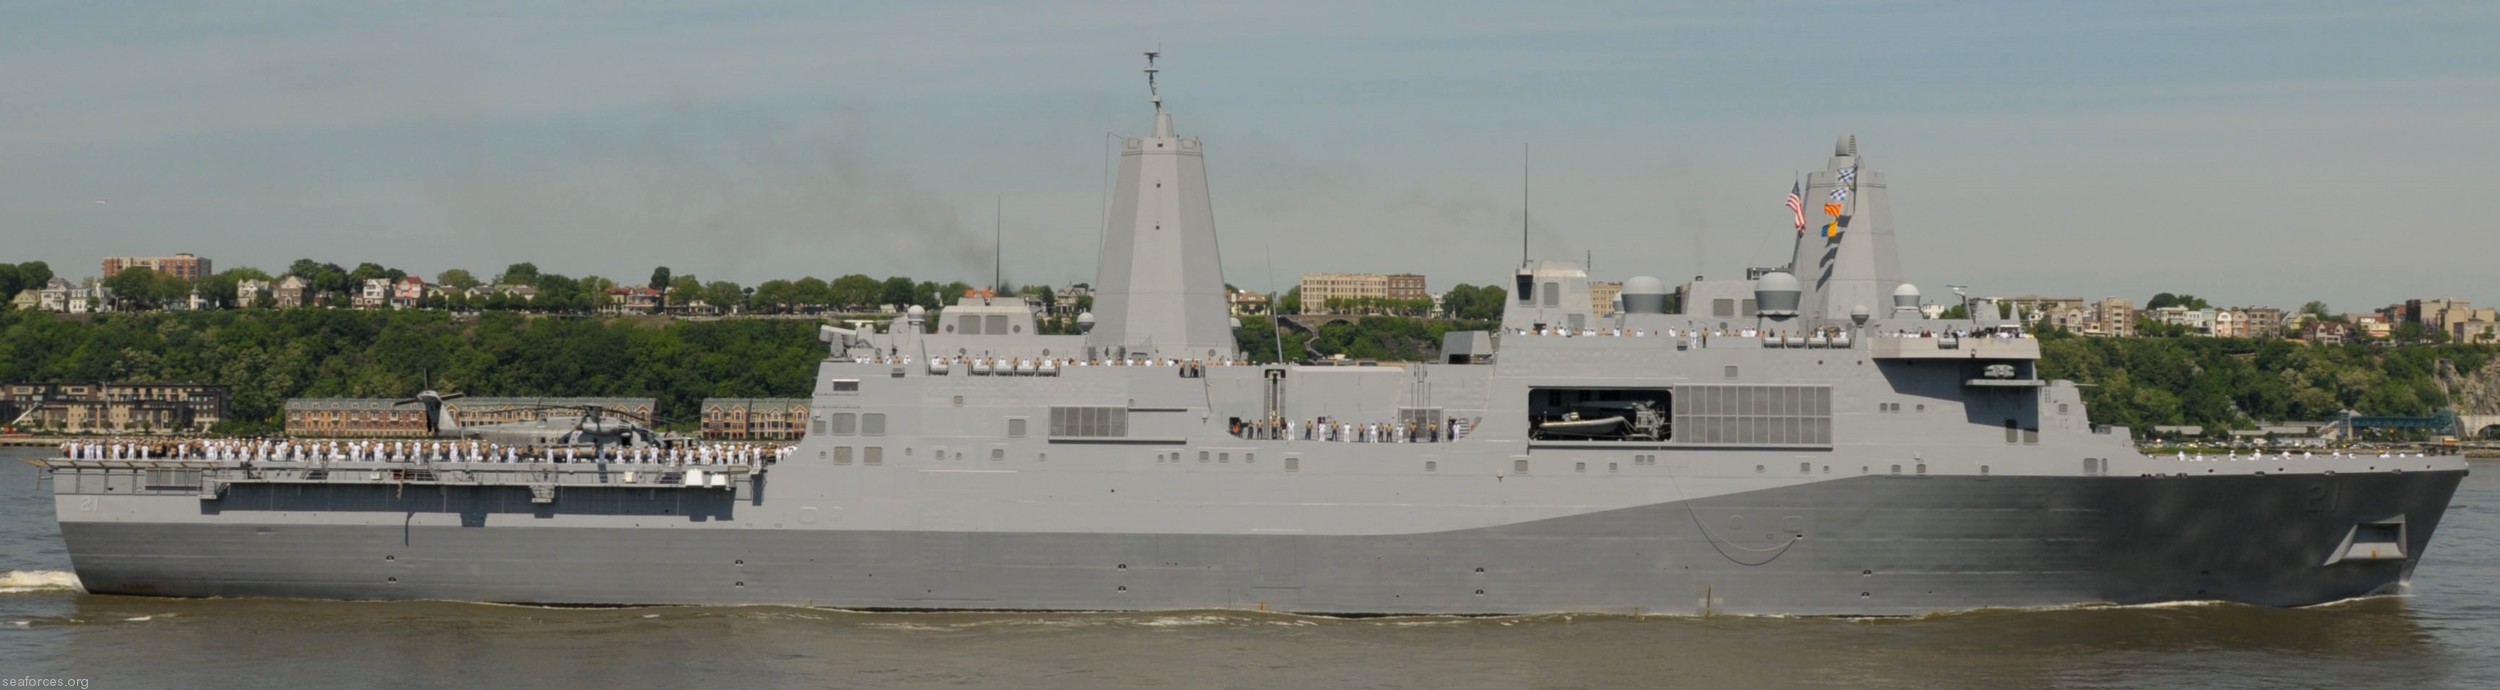 lpd-21 uss new york san antonio class amphibious transport dock ship navy 68 fleet week